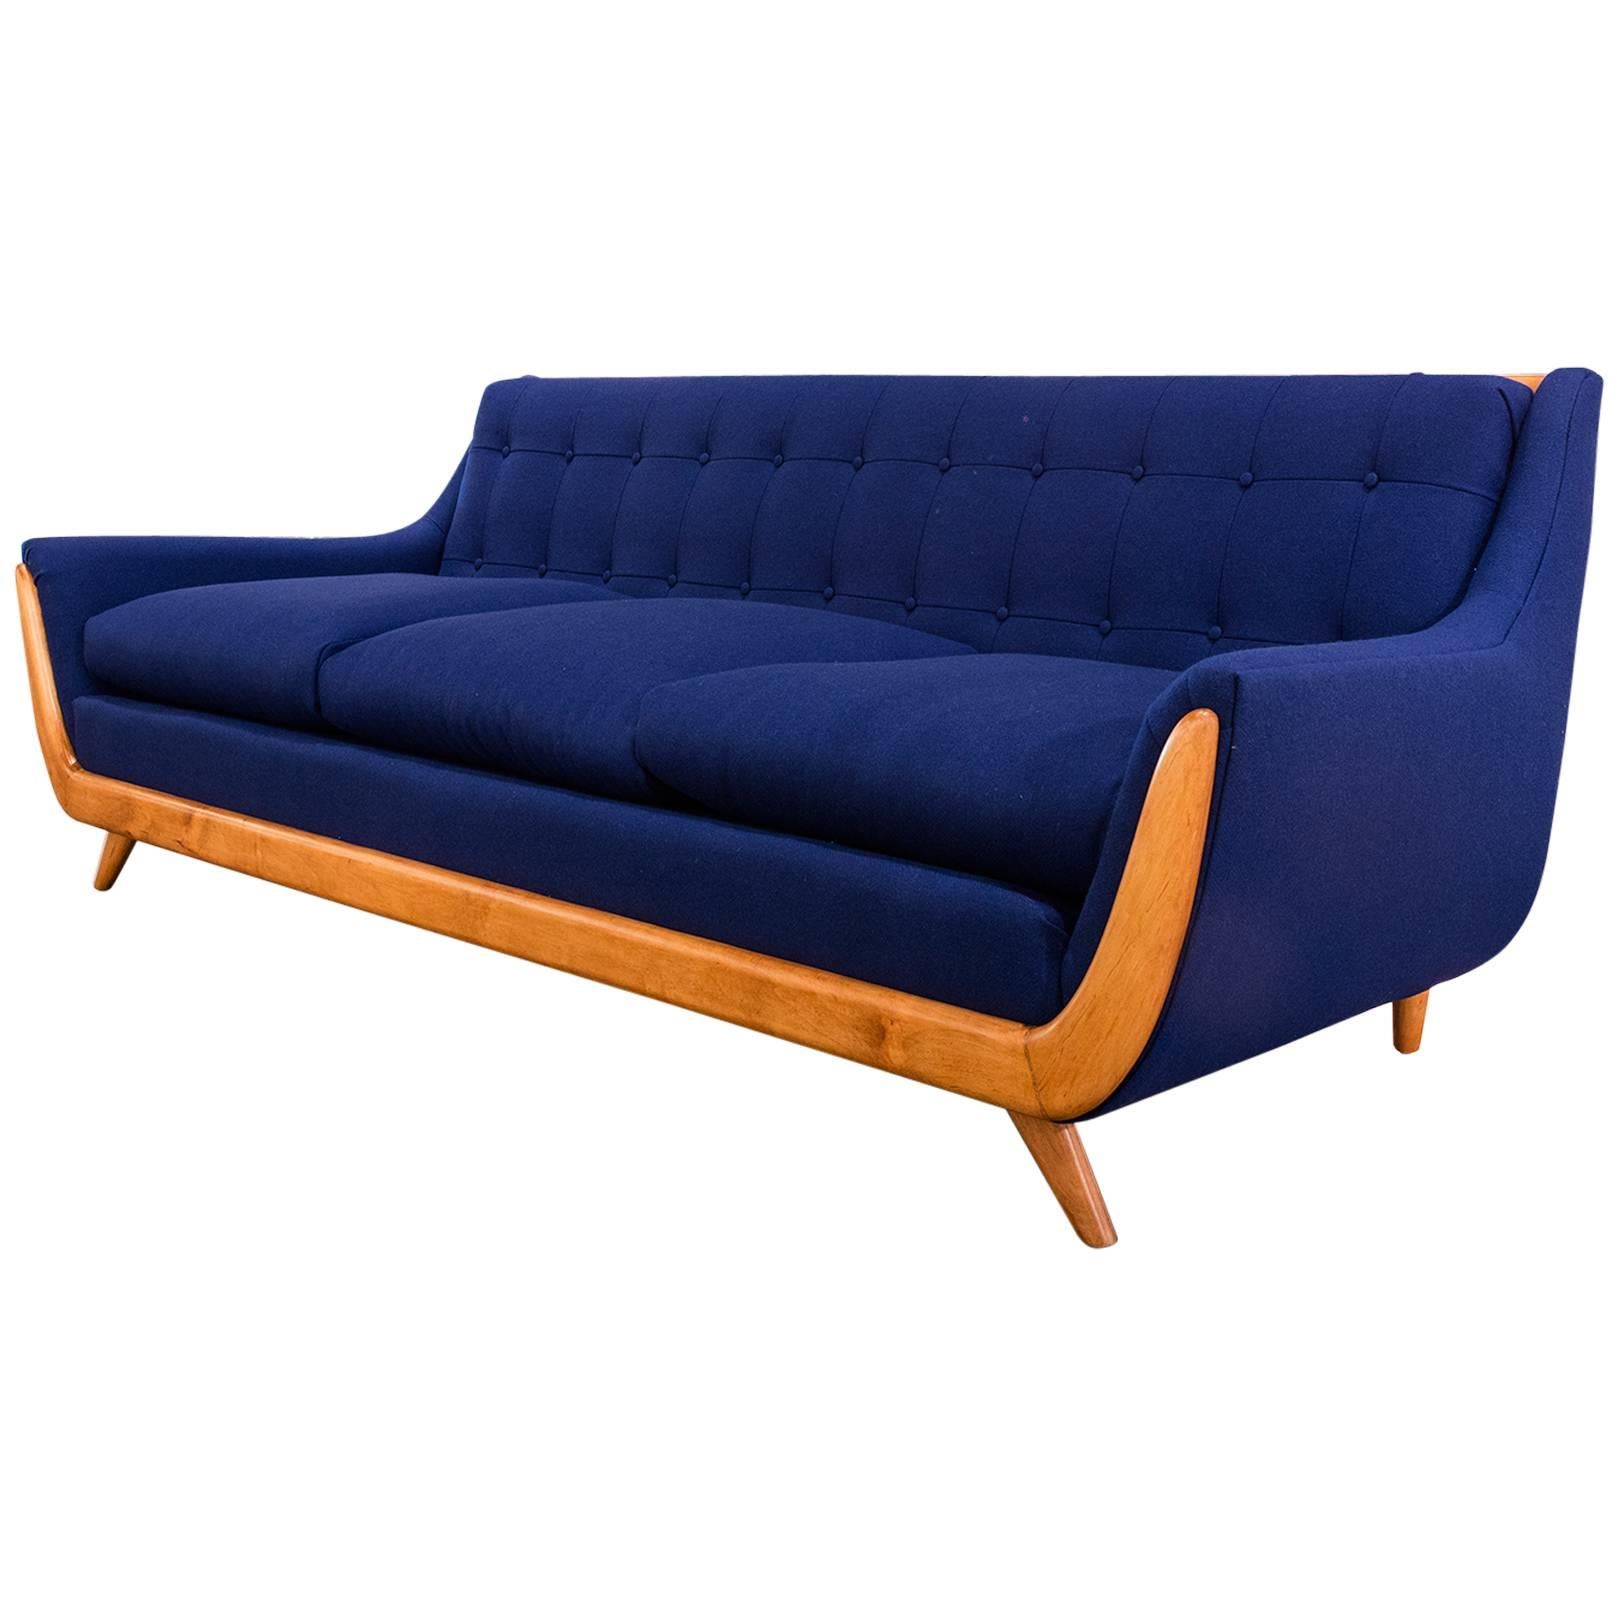 Three-Seat American Blue Sofa For Sale